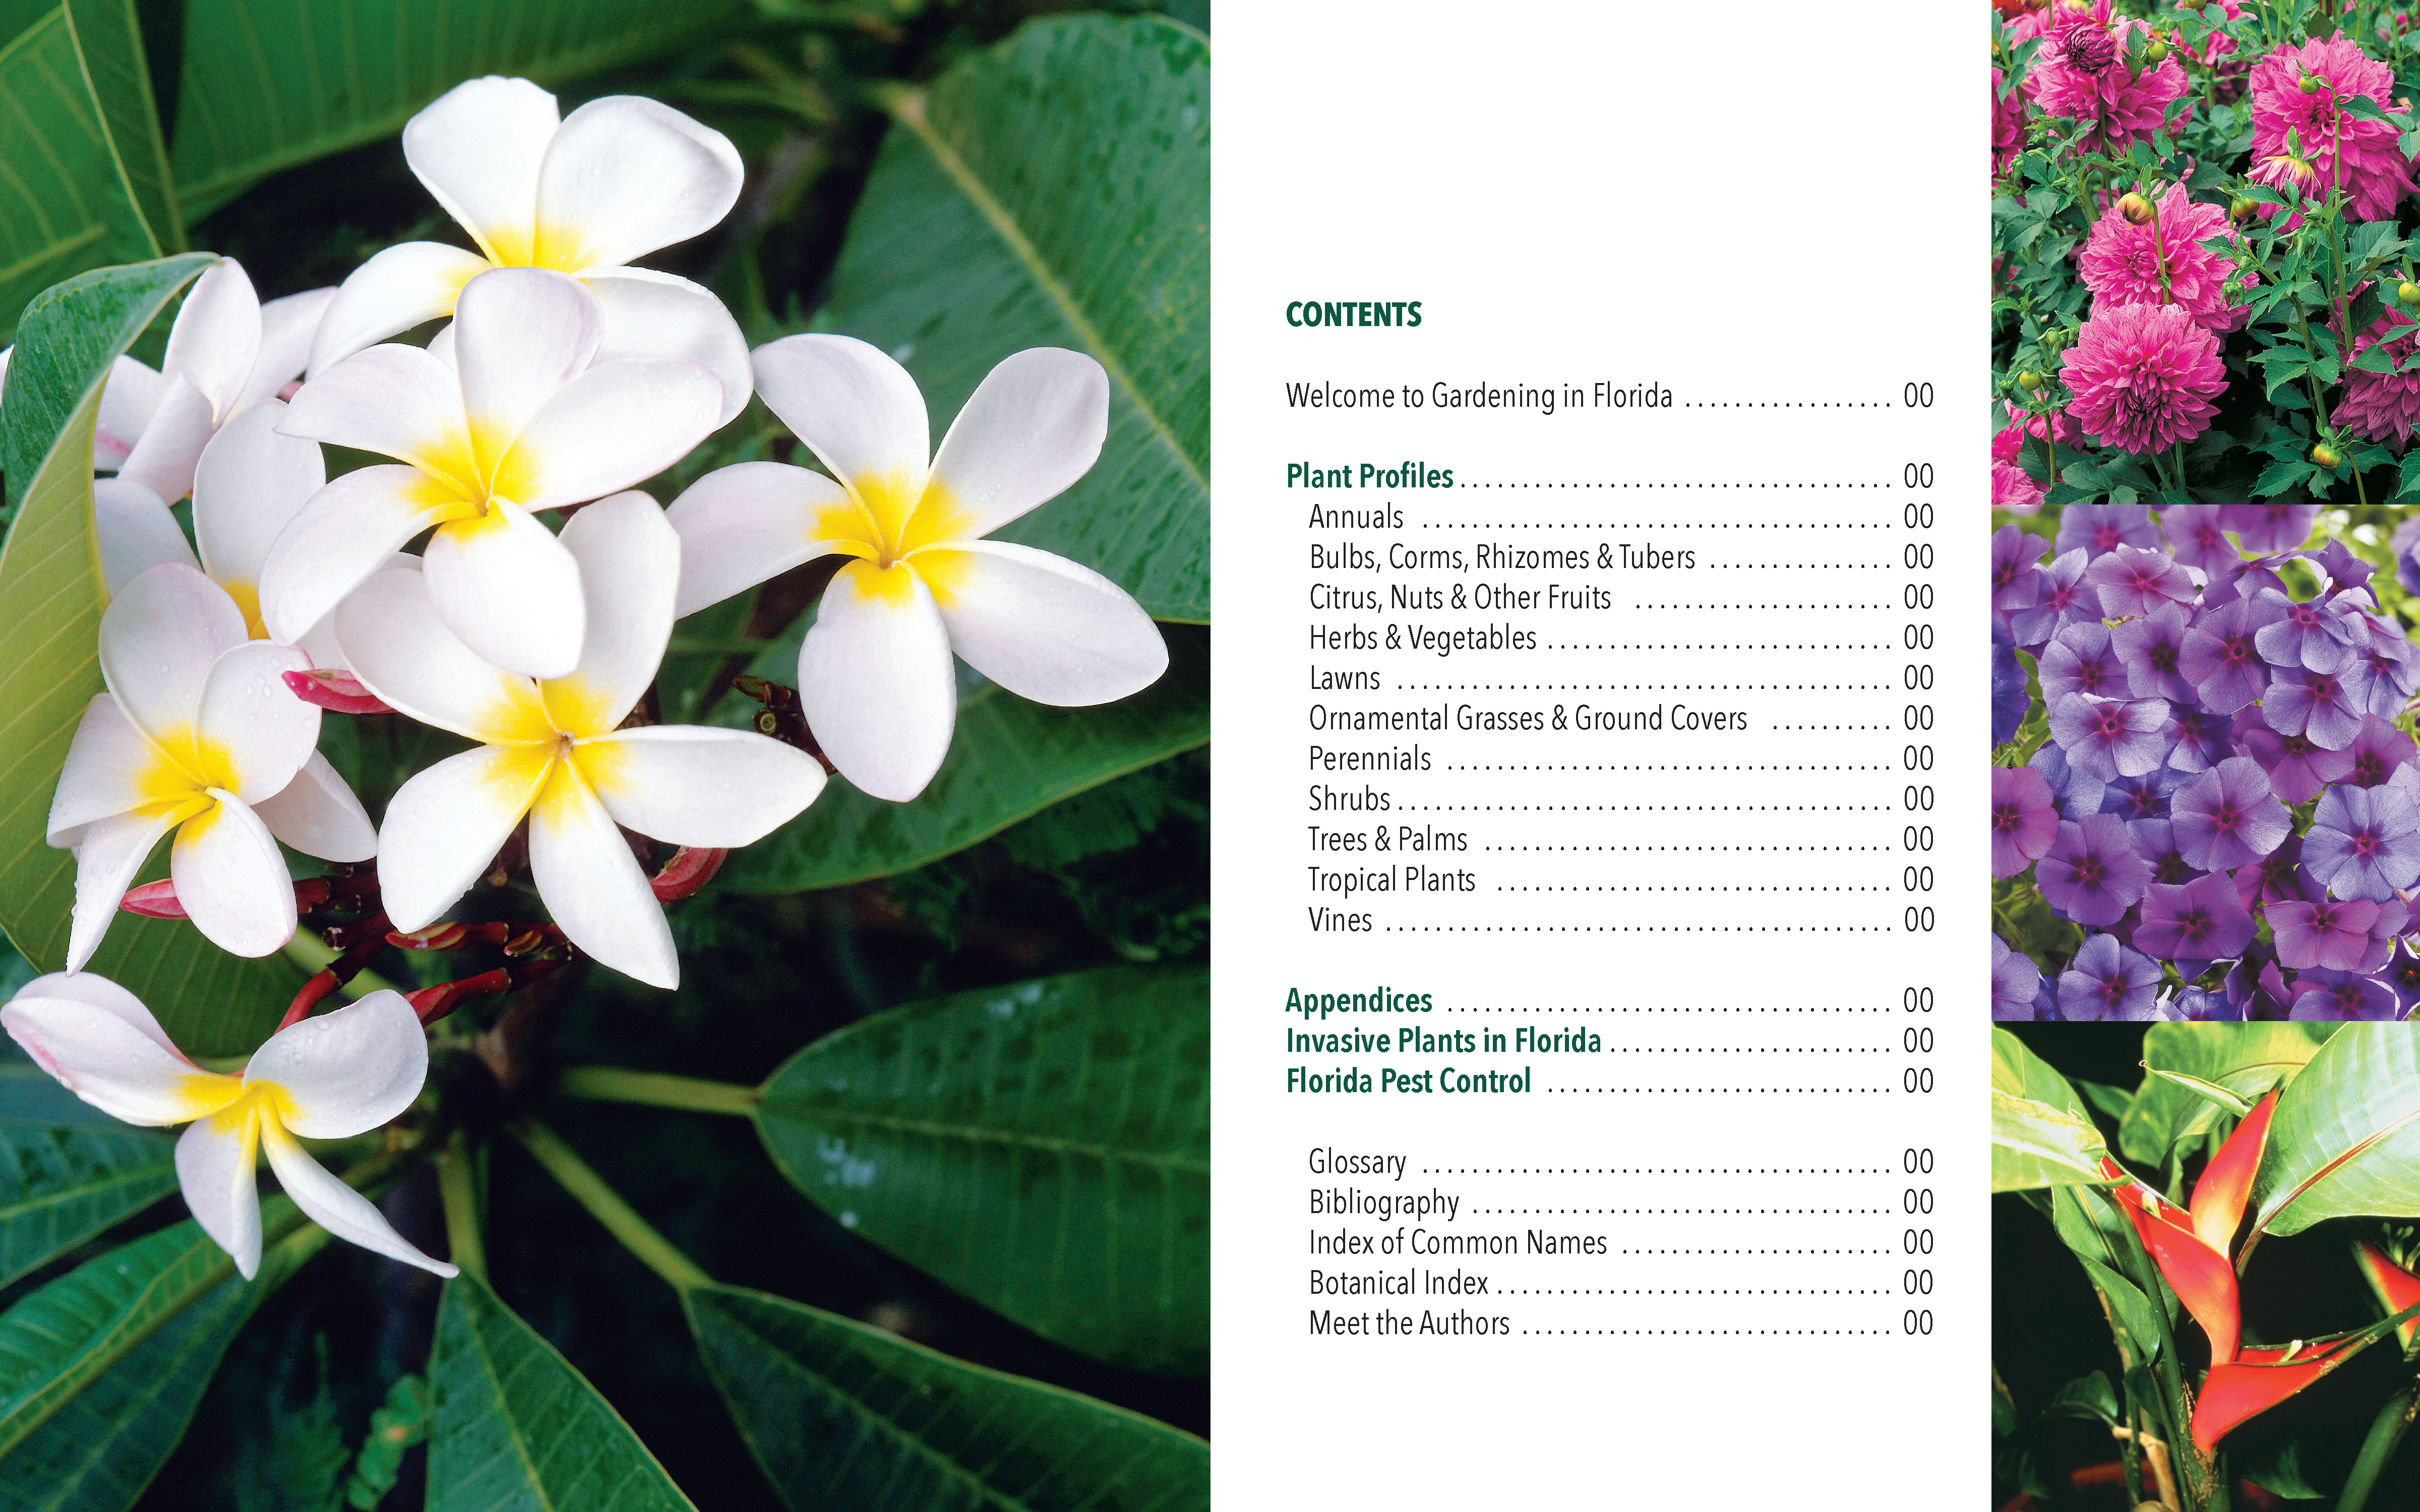 Florida Gardener's Handbook, 2nd Edition